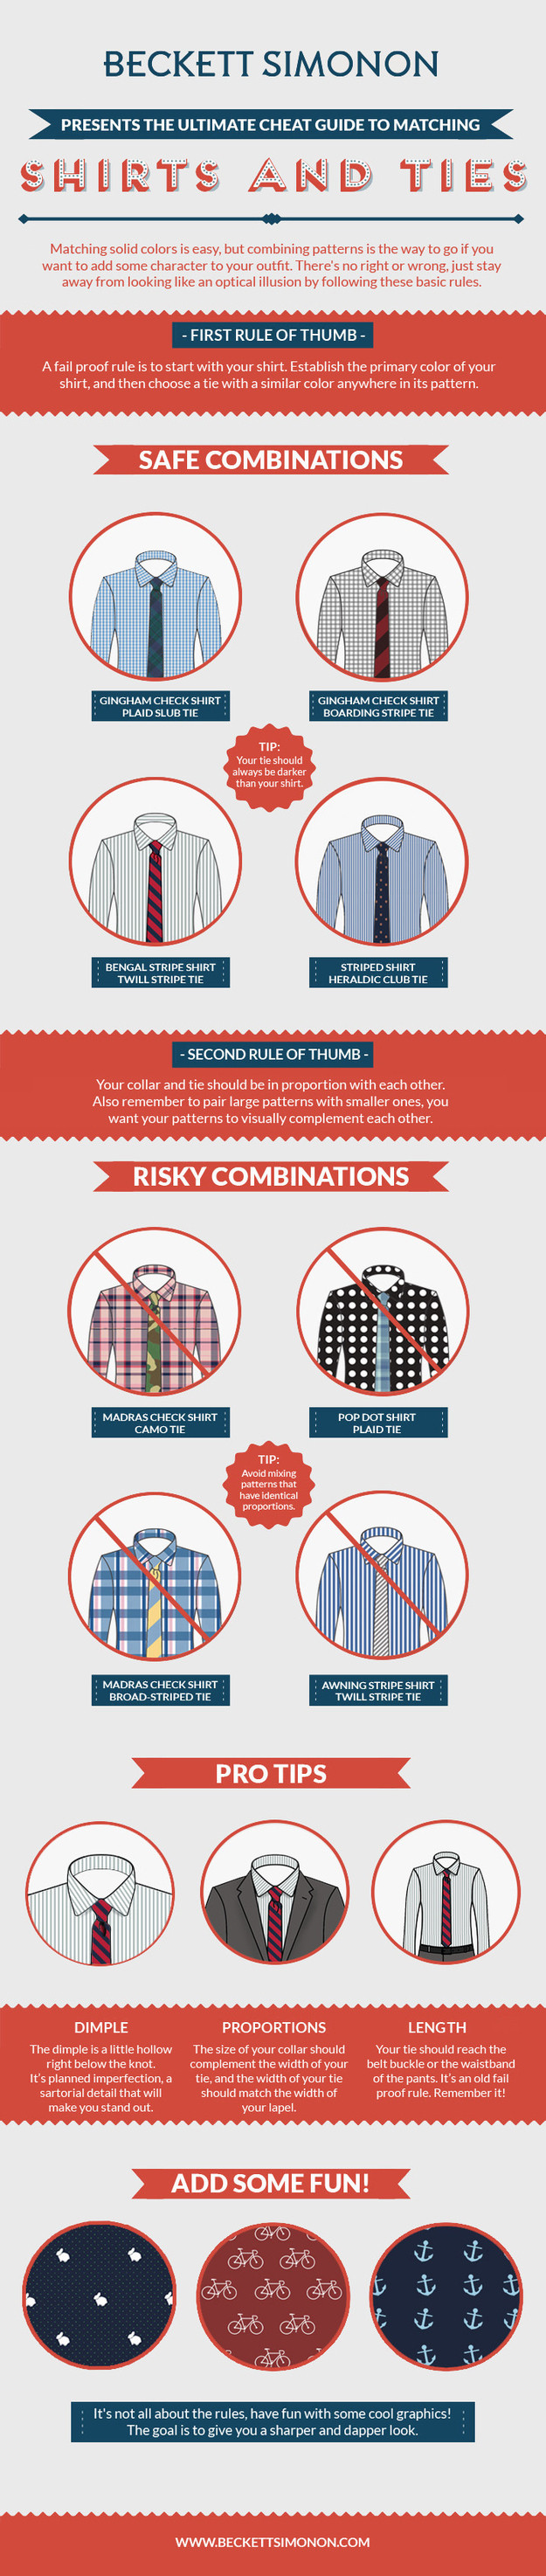 shirt and tie combinations chart - Beckett Simonon Shirts And Yies